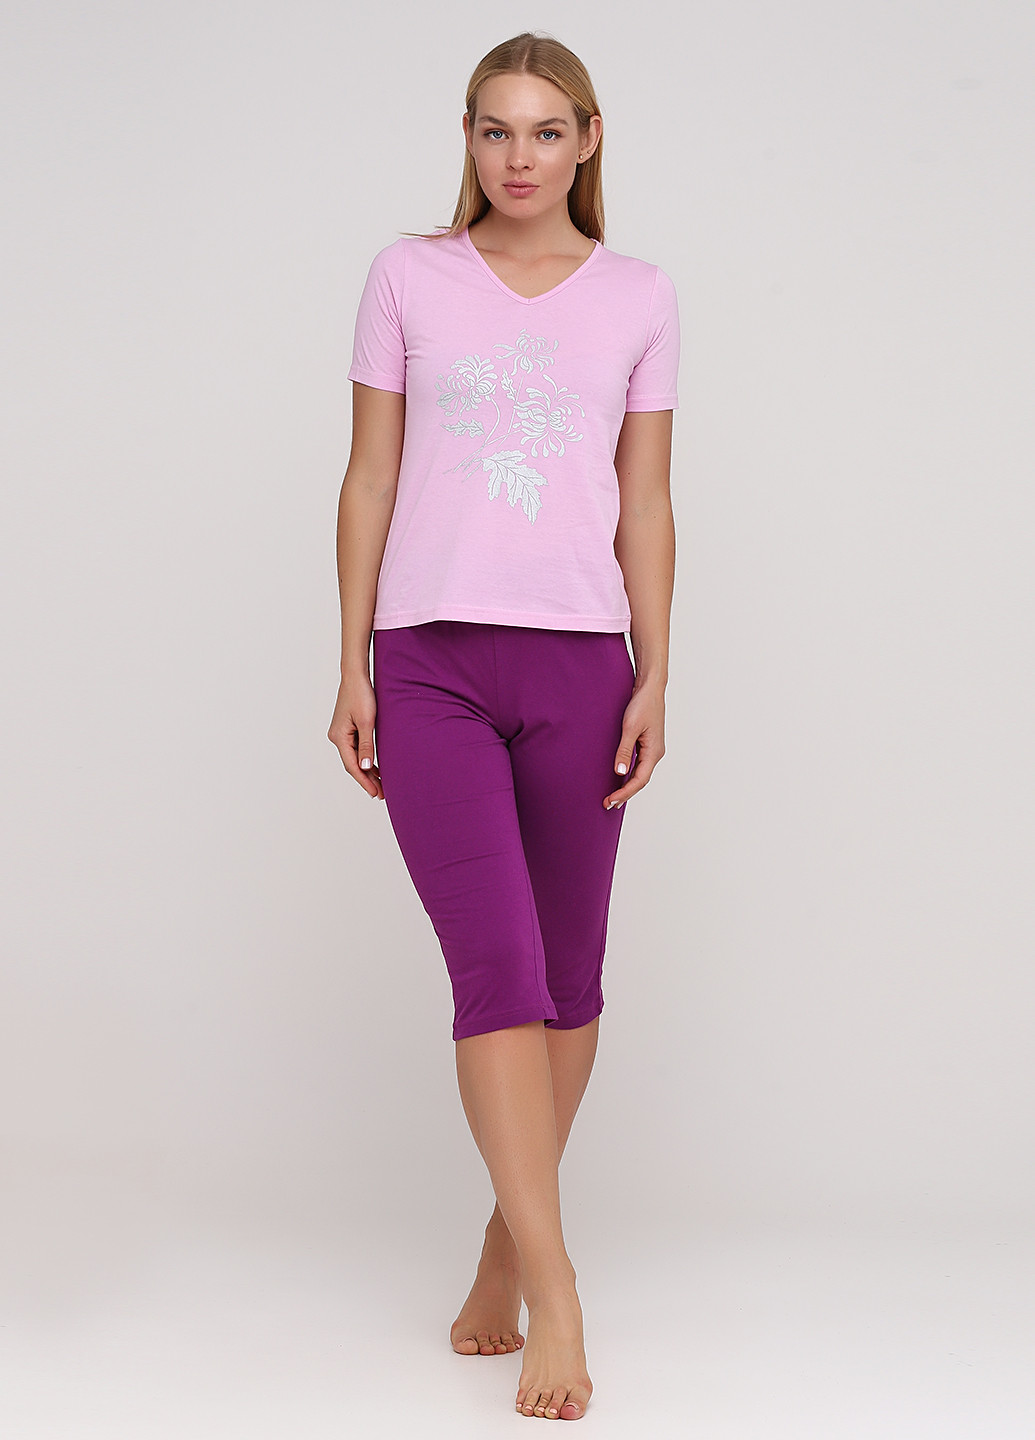 Лиловая всесезон пижама (футболка, бриджи) футболка + бриджи Aniele